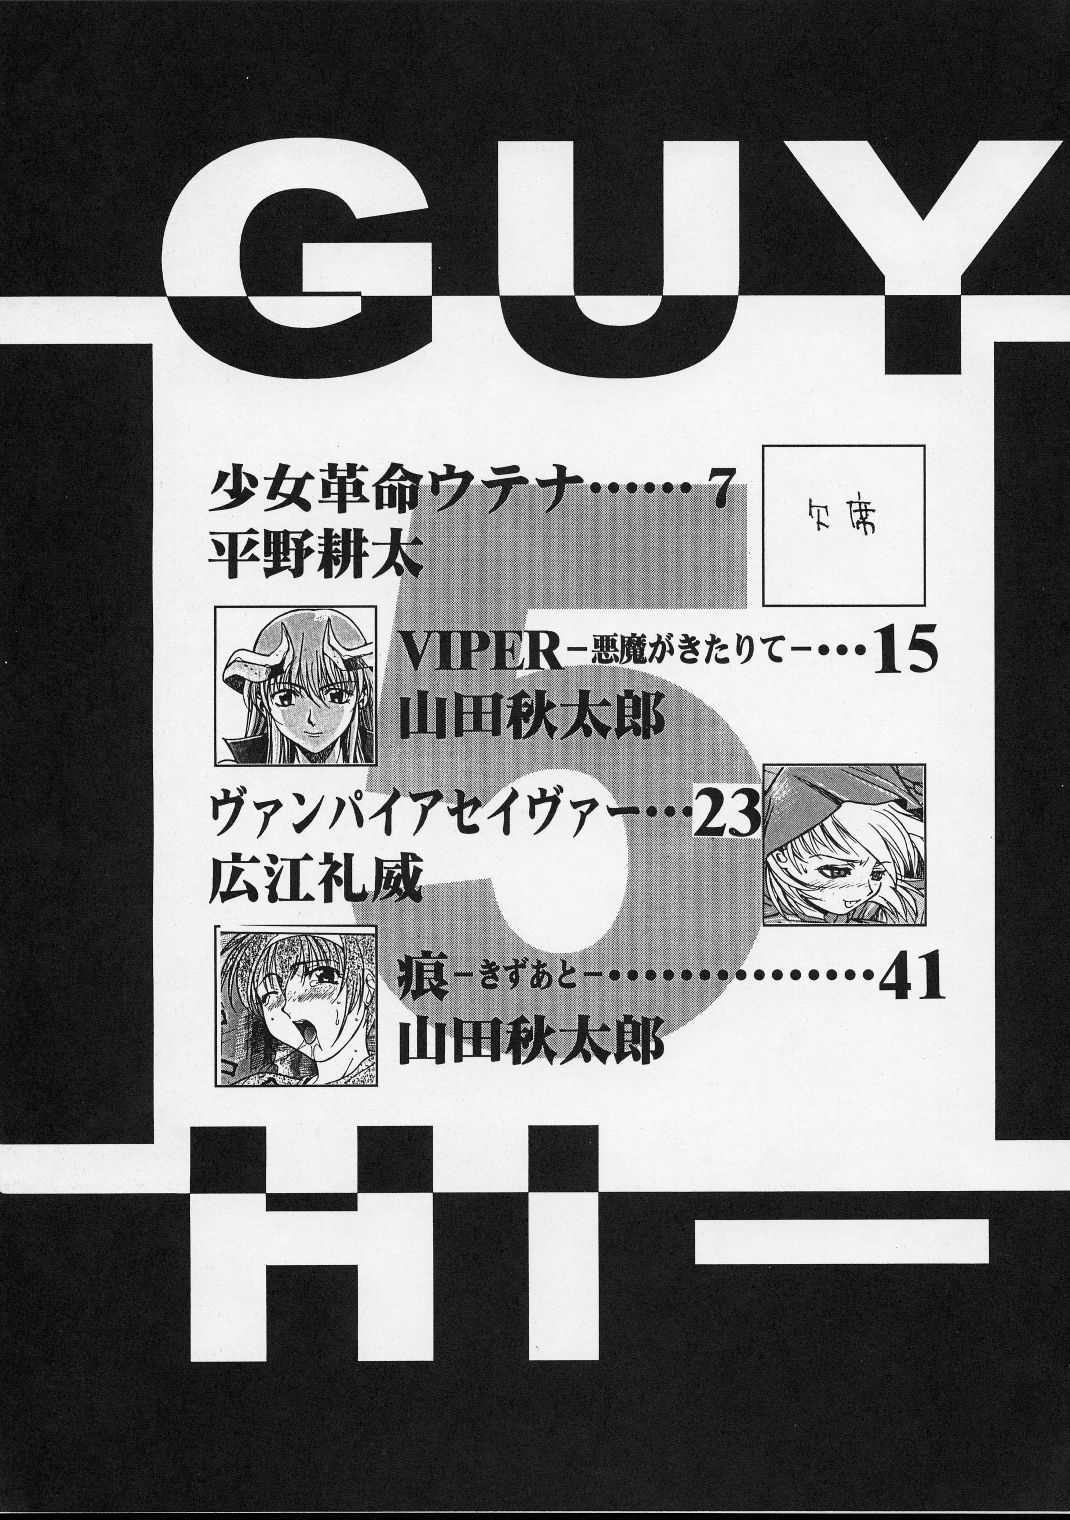 [Guy-ya] HI-SIDE Ver. 05 (Utena, To Heart, Pokemon, Dark Stalkers, GaoGaiGar, VIPER,Kizuato) 